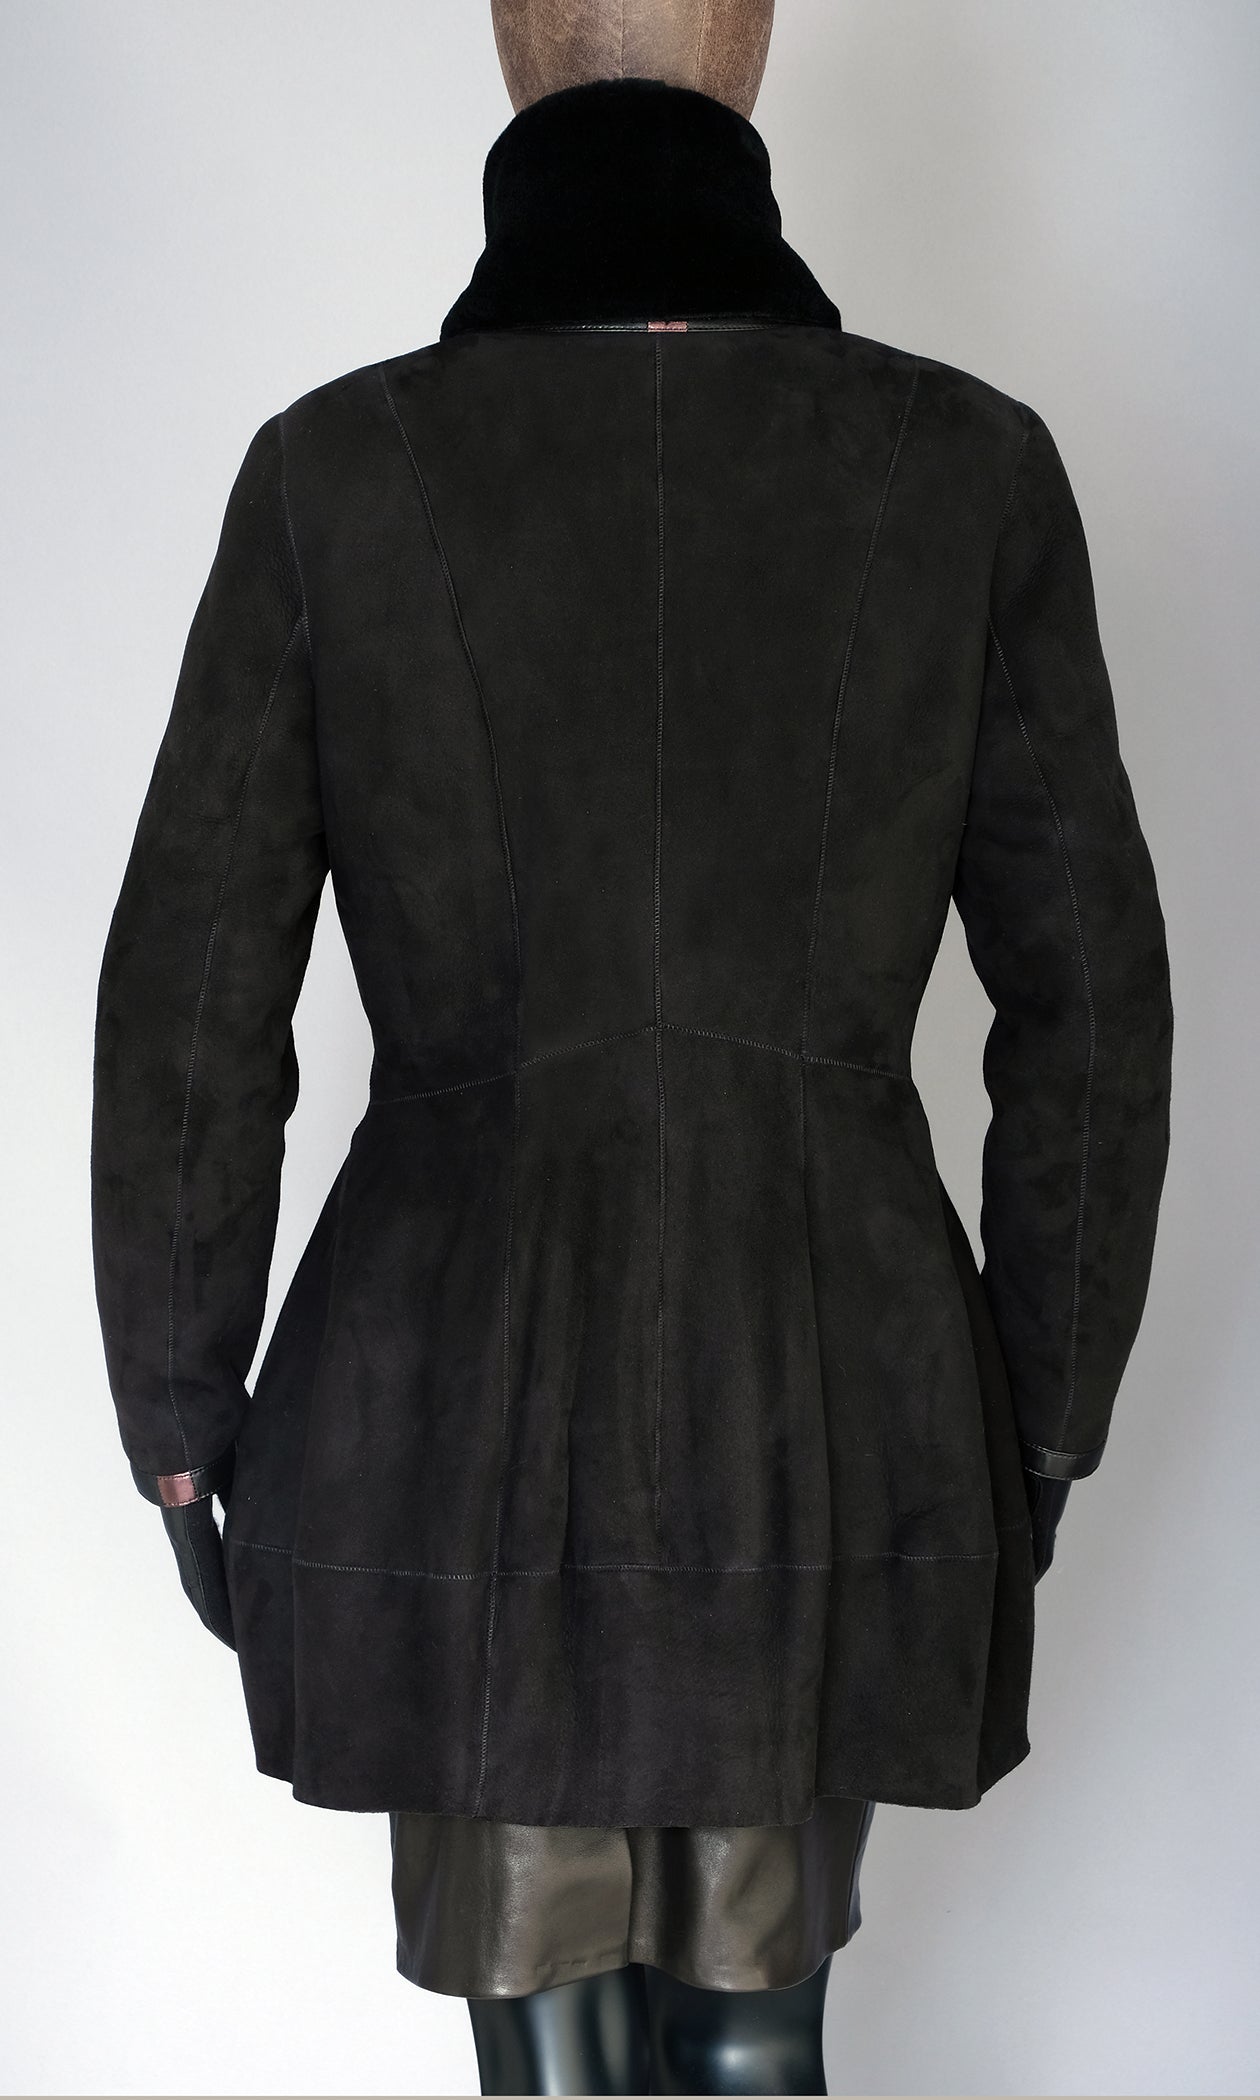 black suede merino shearling peplum jacket size medium 10